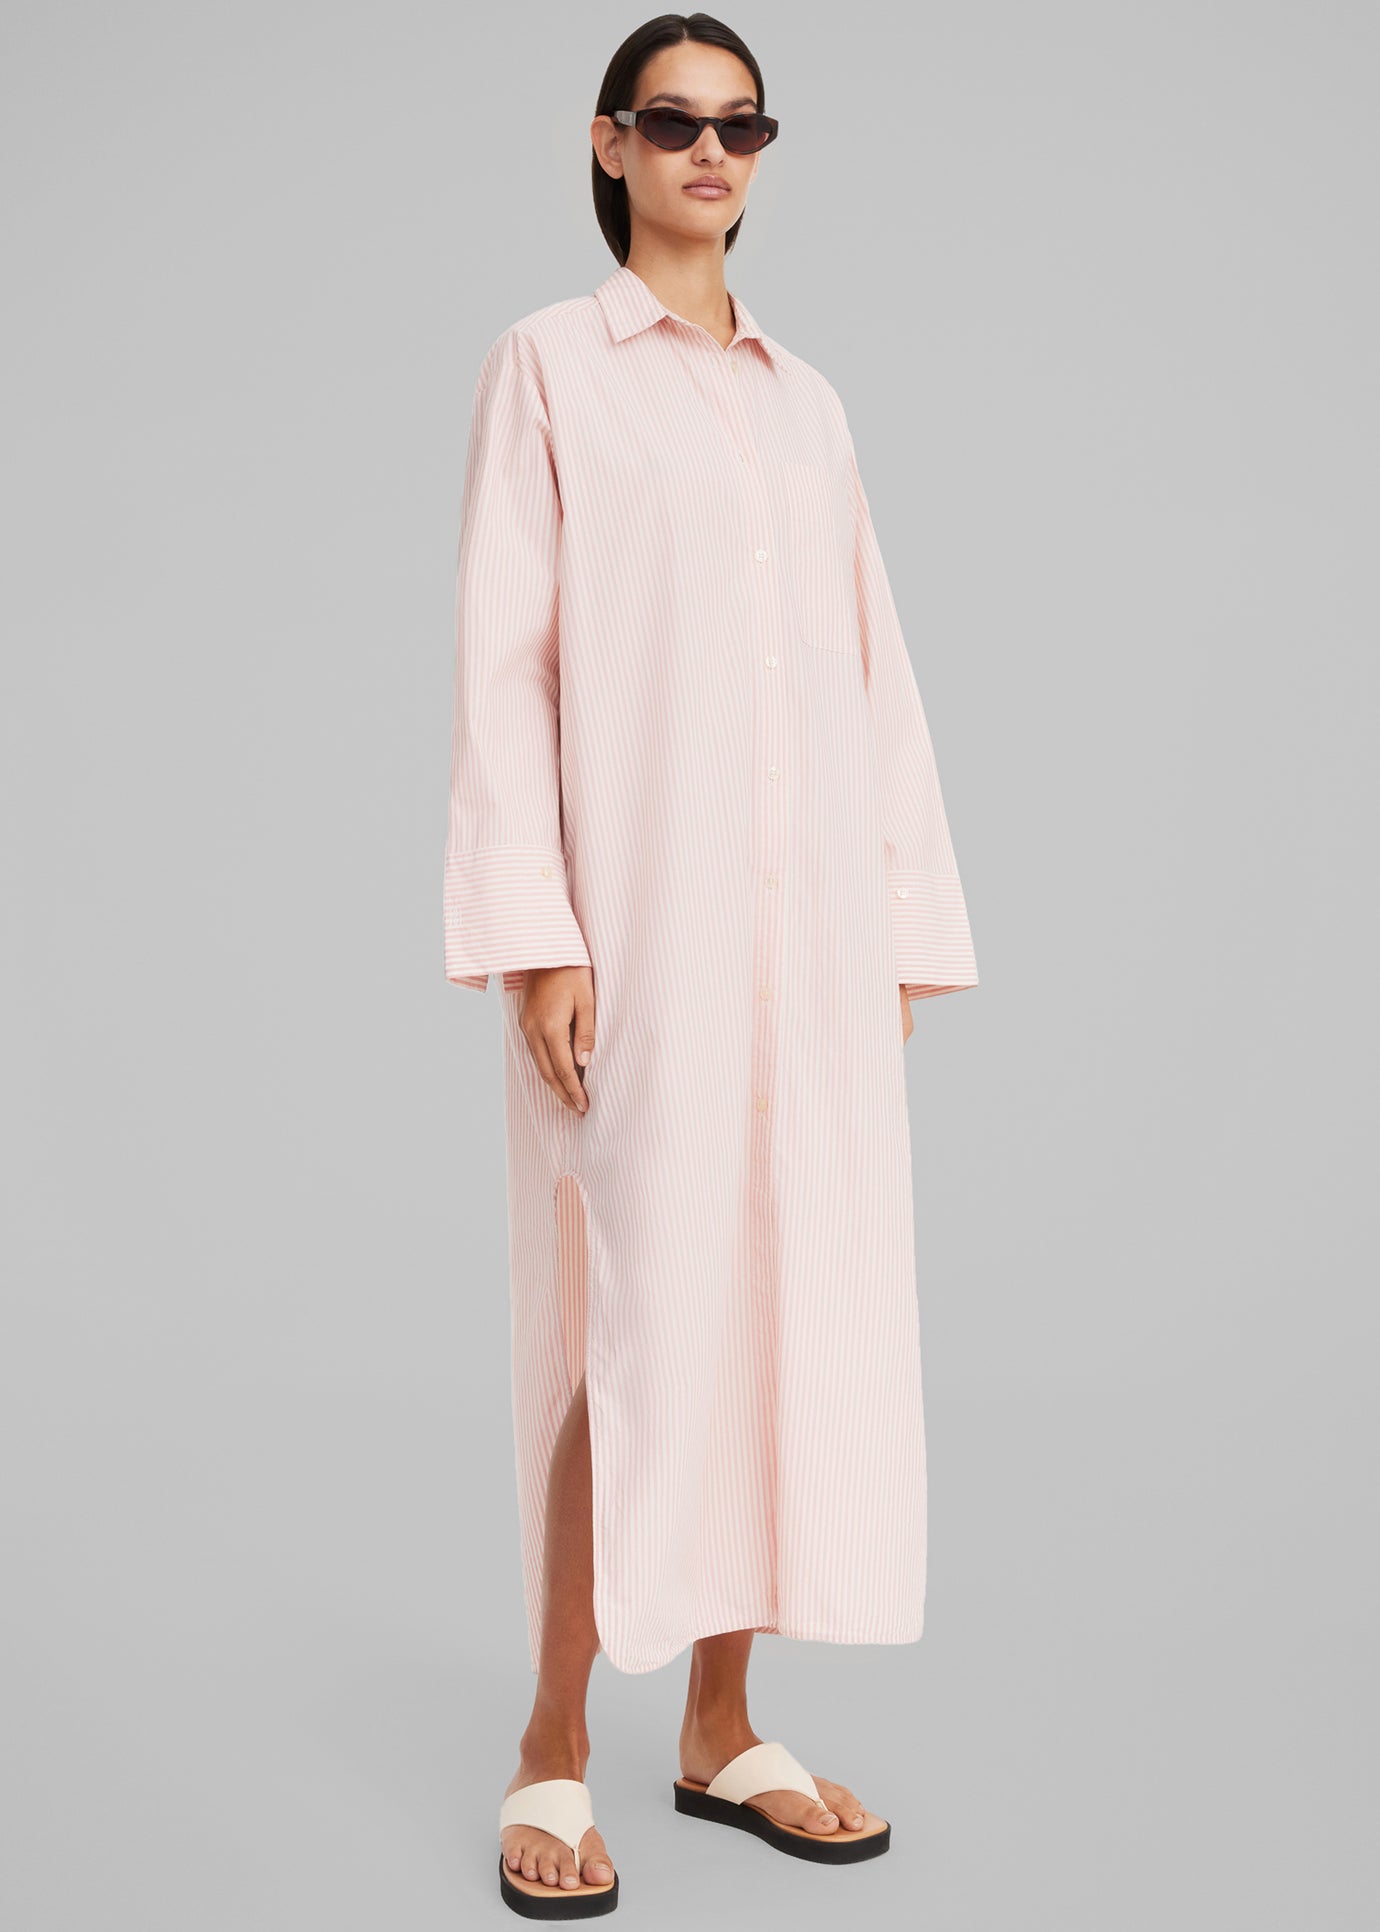 By Malene Birger Perros Dress - Pink Stripe